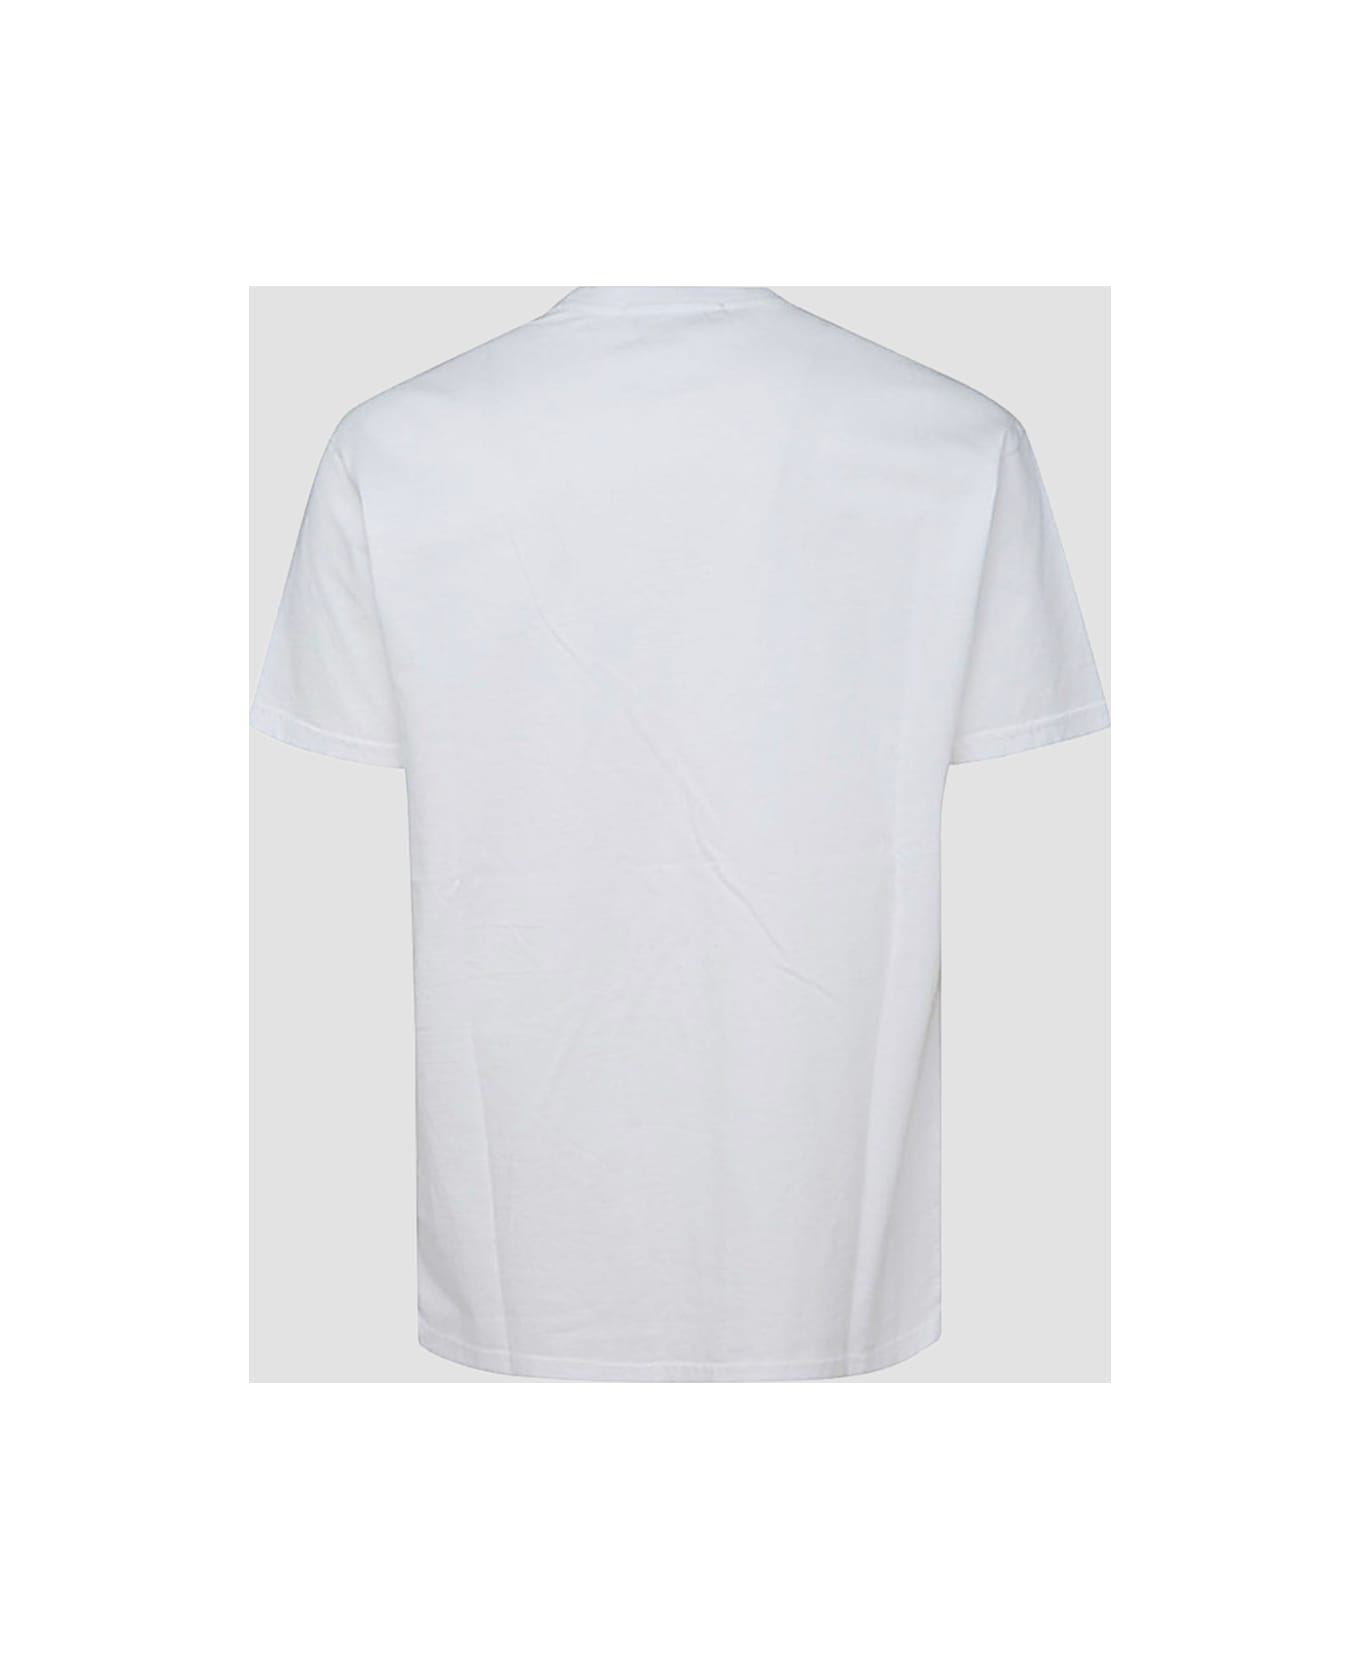 Vivienne Westwood White Cotton T-shirt - White シャツ